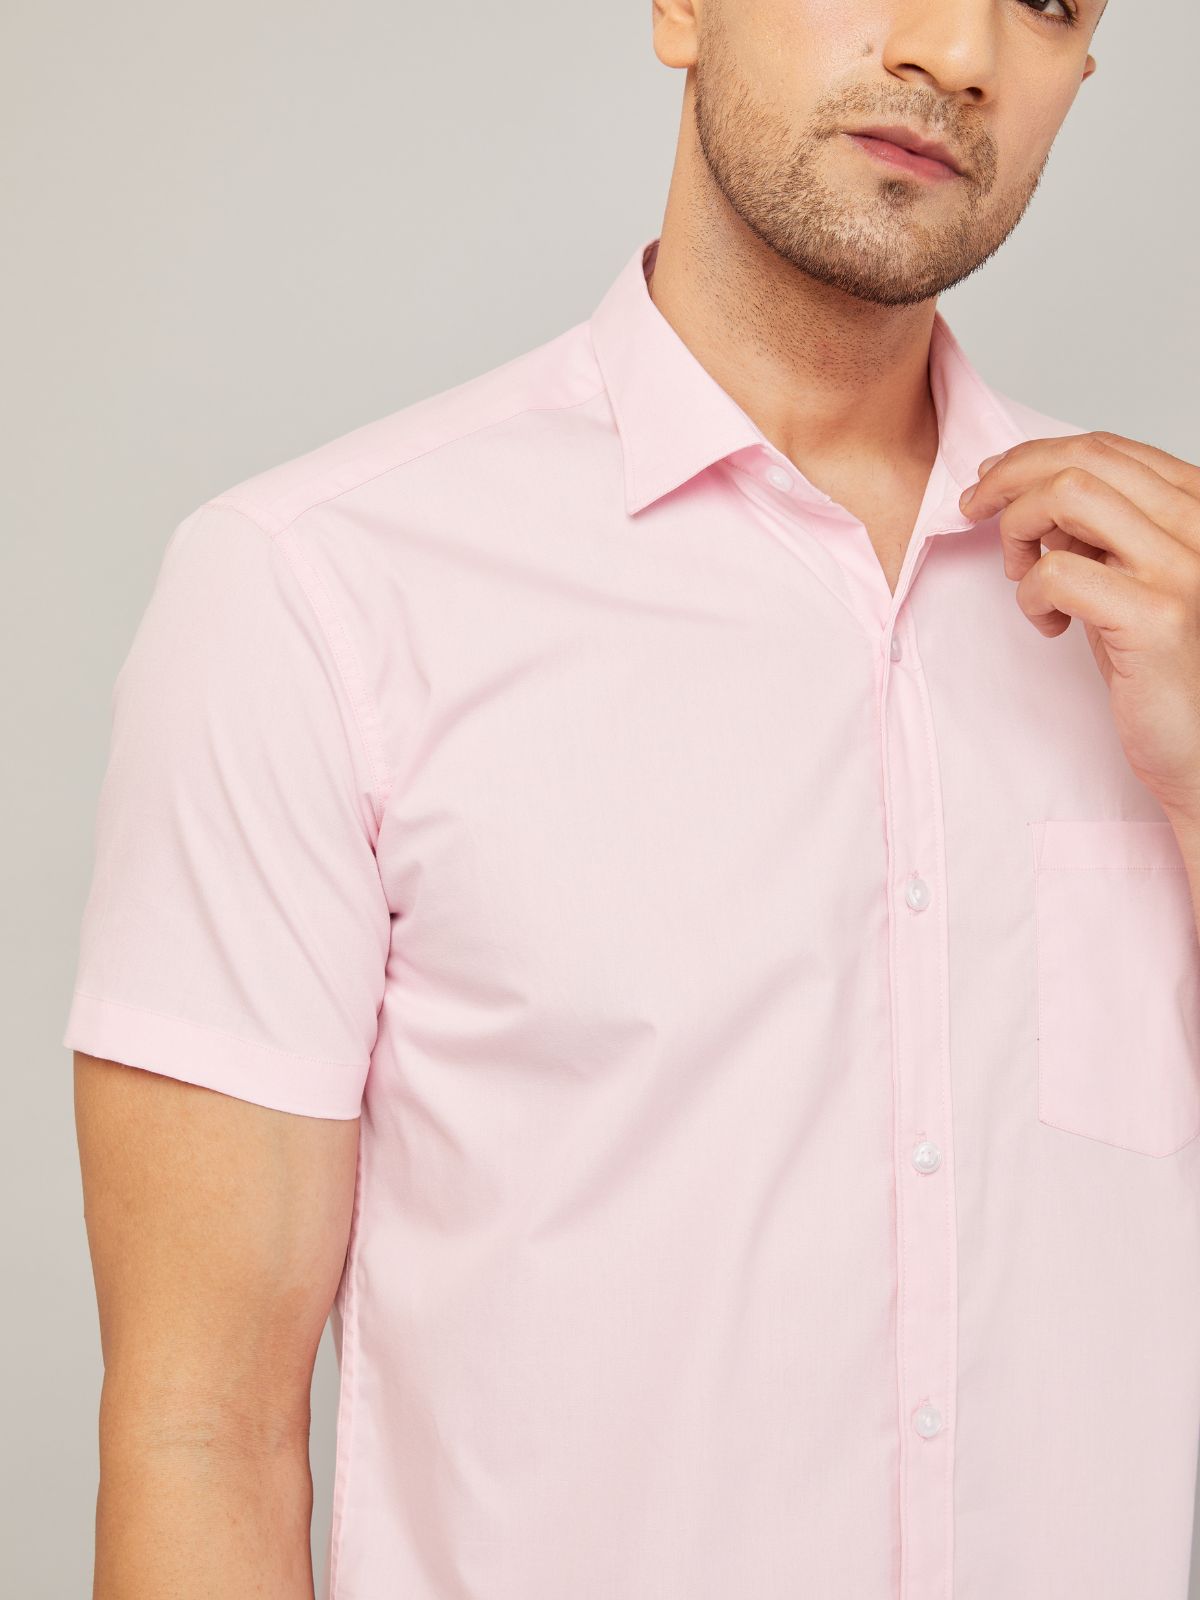 Louis Monarch Men Regular Fit Solid Pink Spread Collar Casual Half Shirt